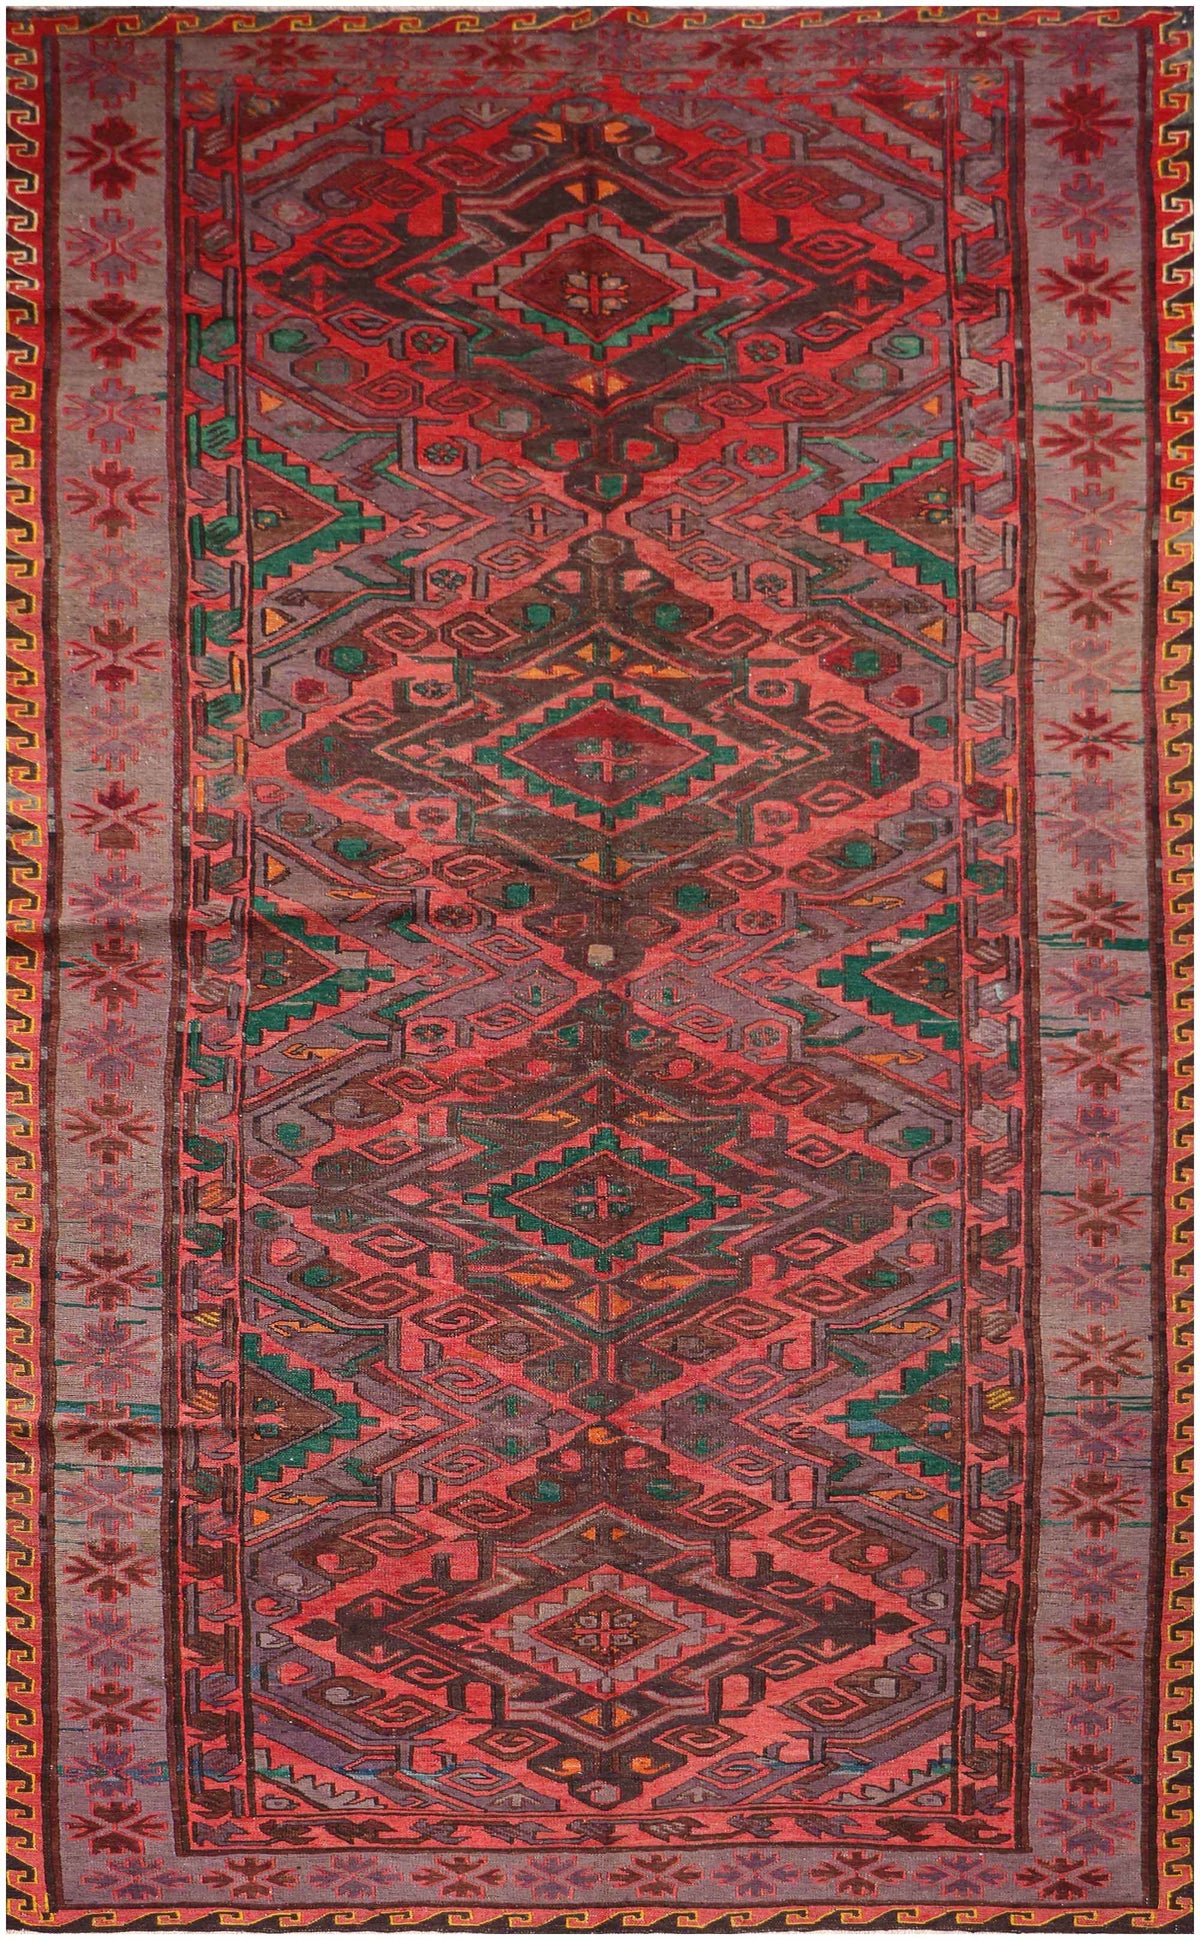 330x158cm Anatolian wool Kilim Sumak (Soumak) Handmade red and green